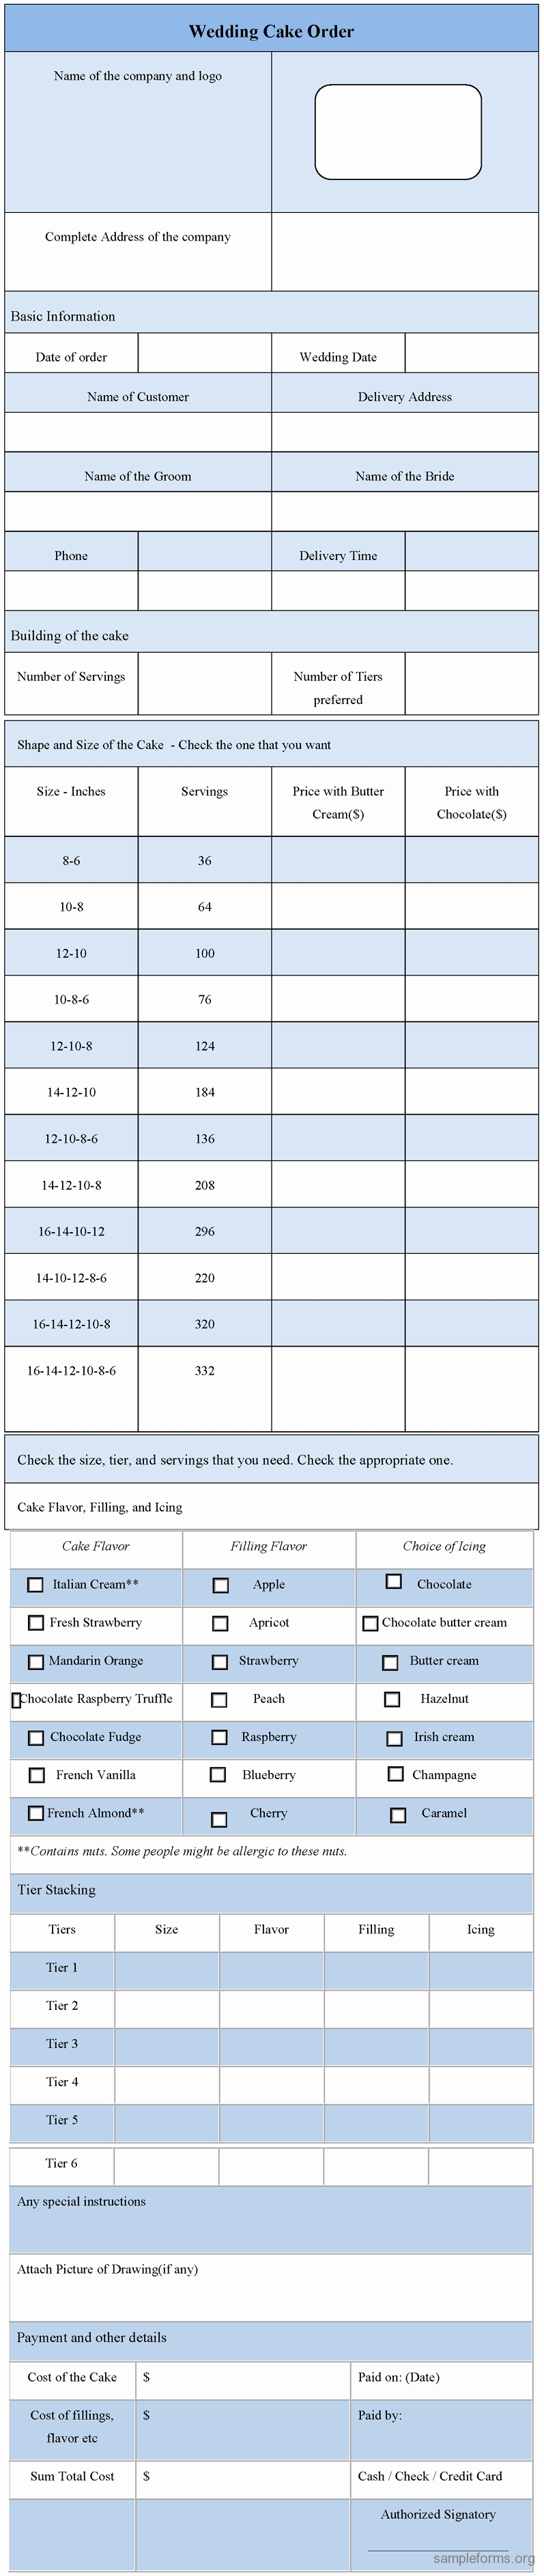 Cake order forms Printable Best Of Wedding Cake order form Sample forms